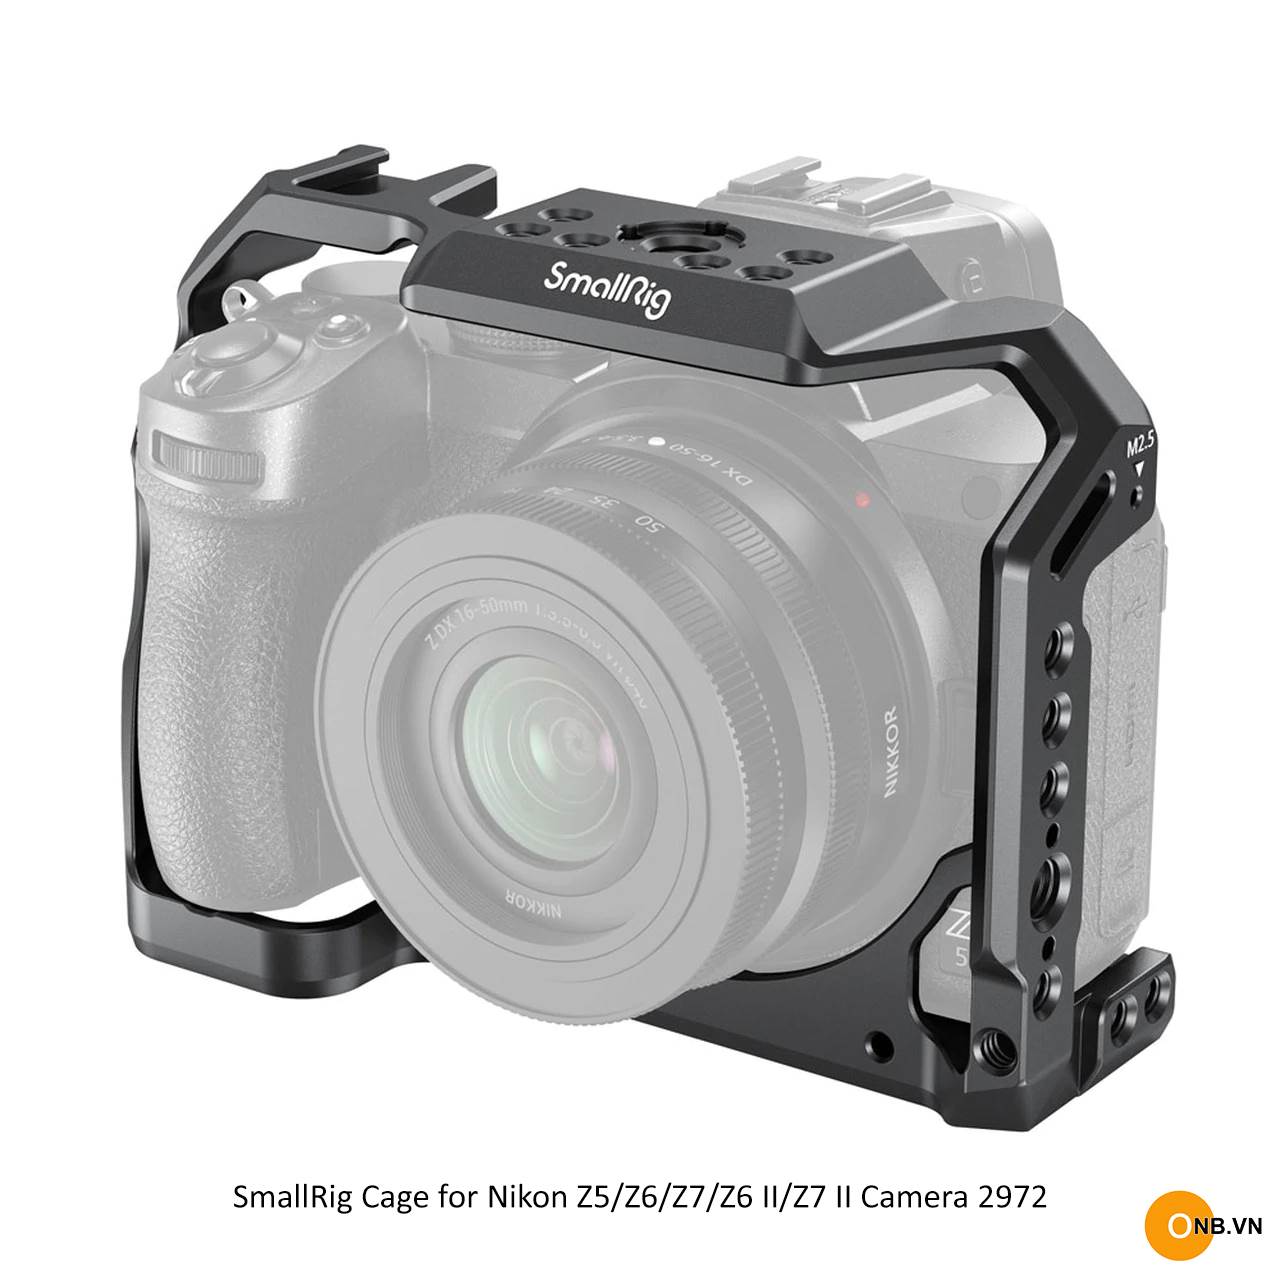 SmallRig 2972 Cage for Nikon Z5/ Z6 / Z7 / Z6II / Z7II